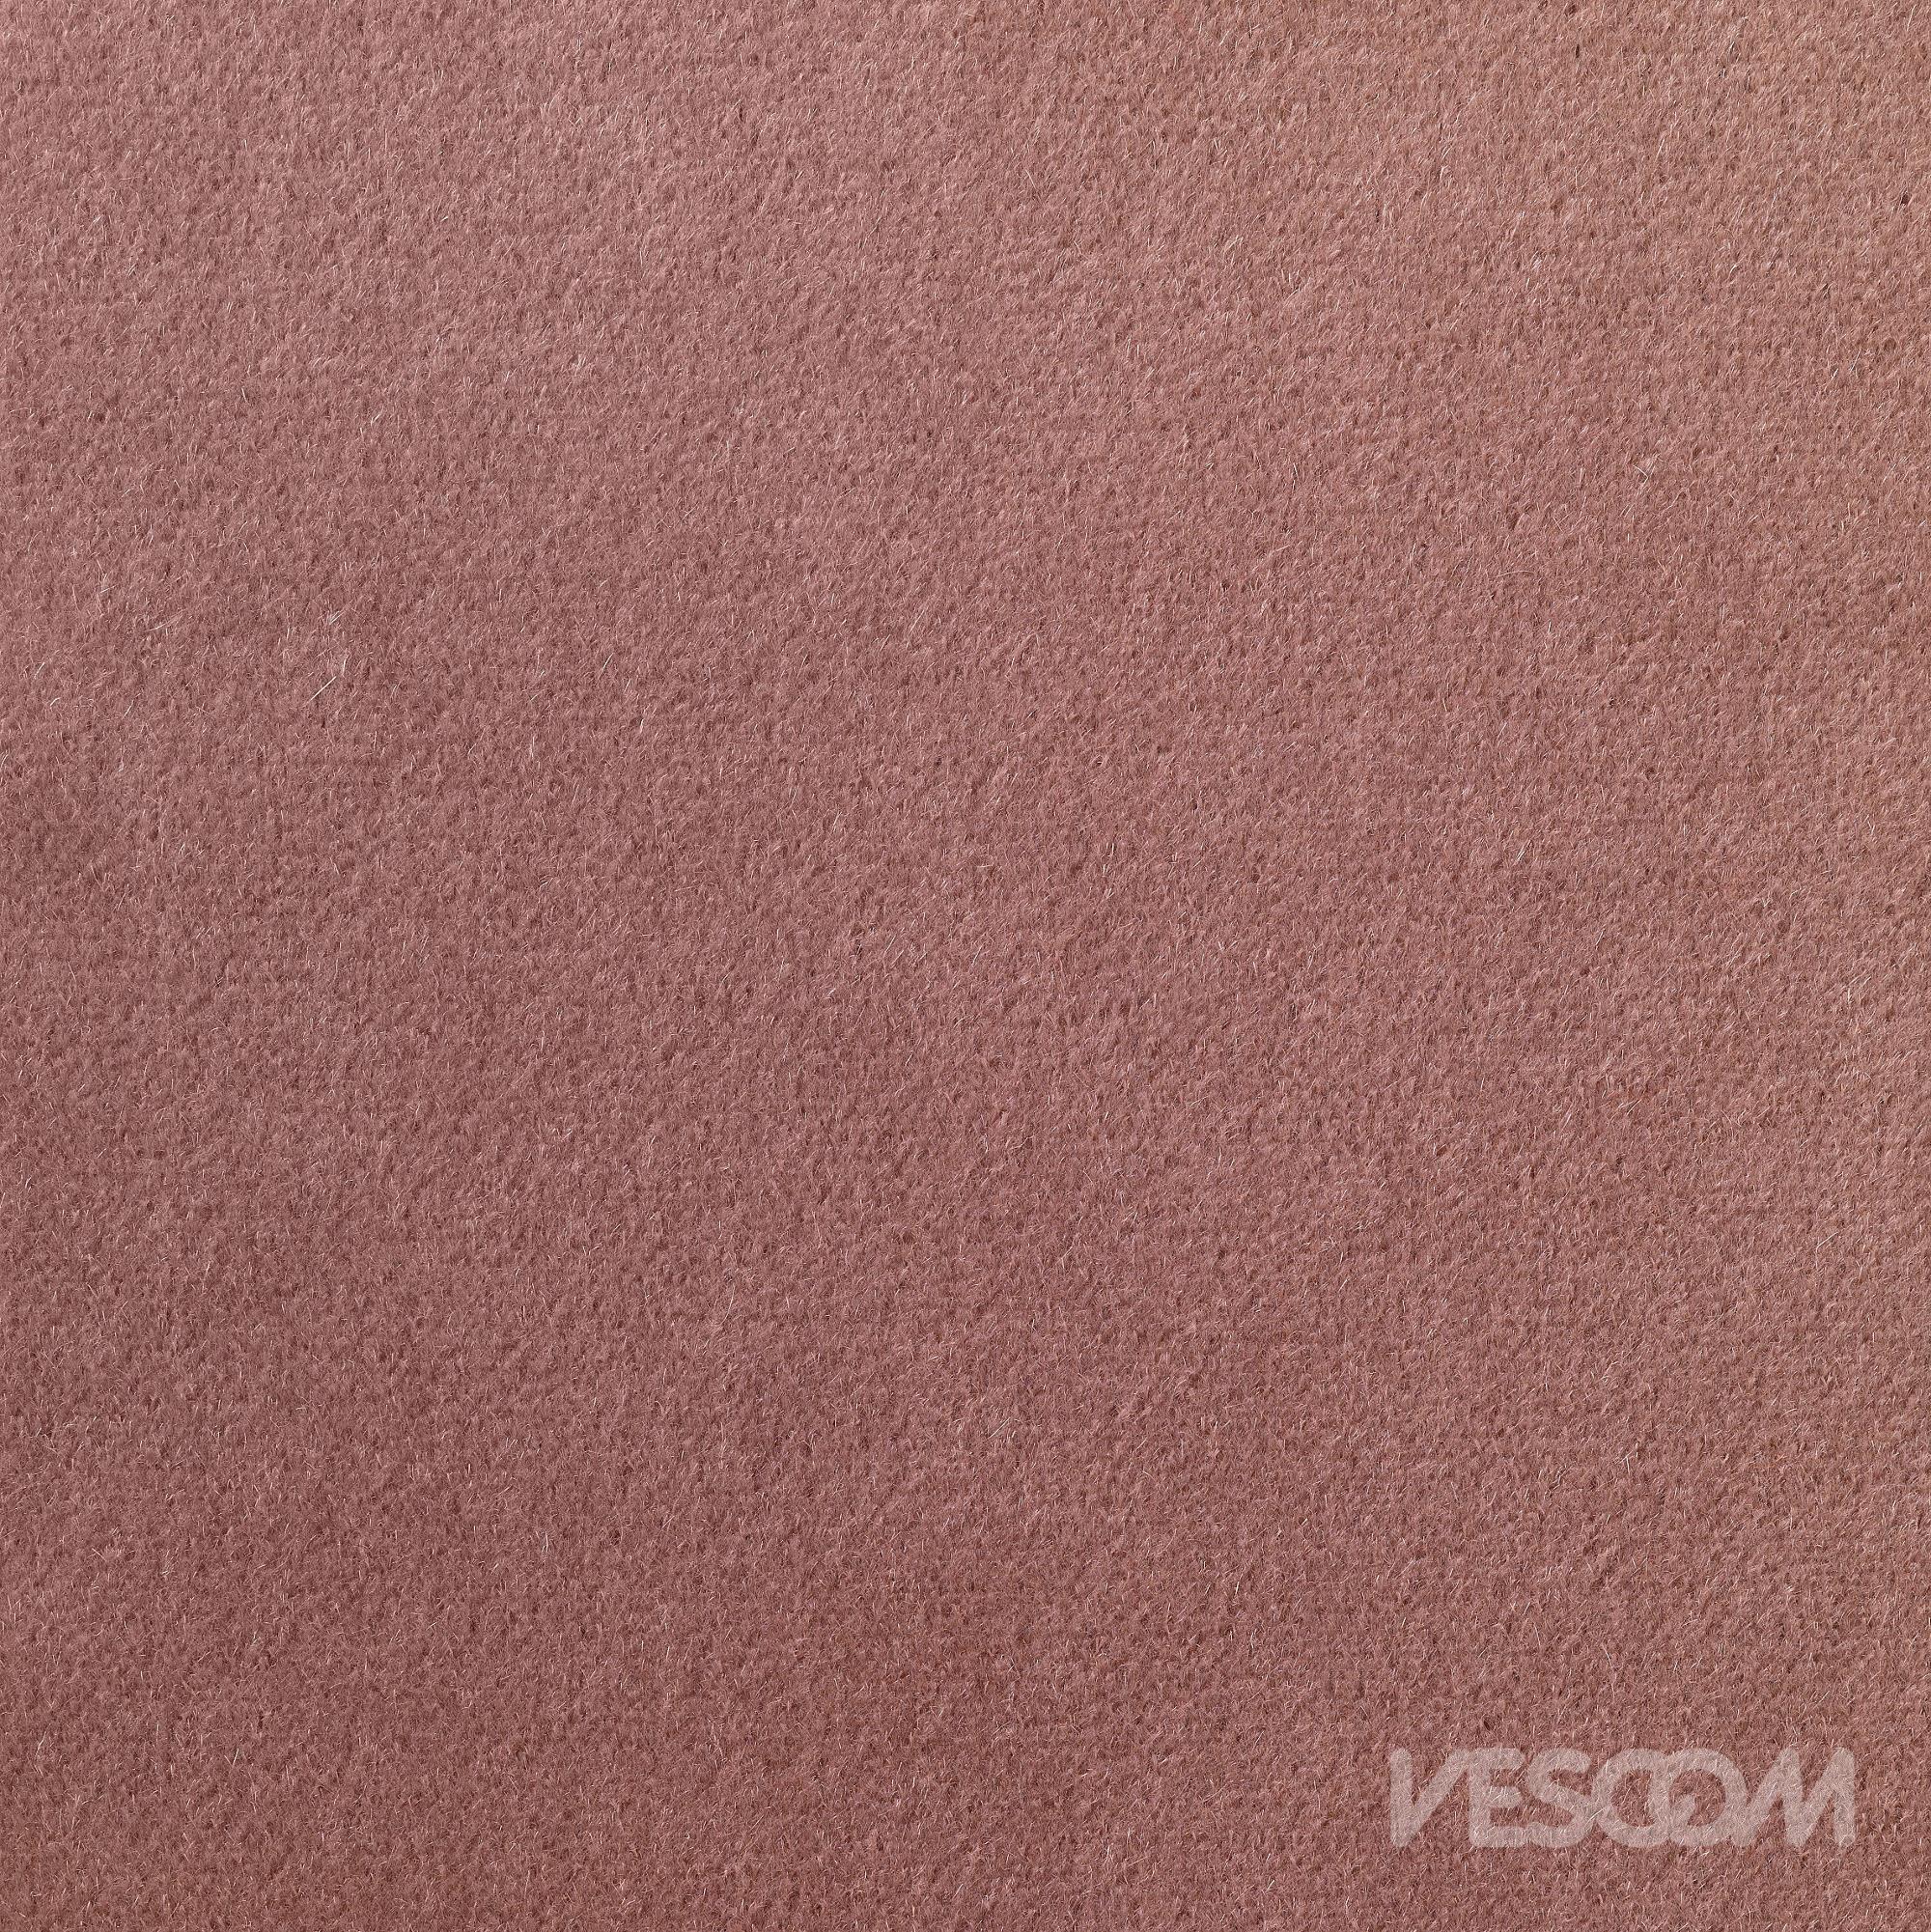 Vescom Ariana Upholstery Fabric 7061.30 